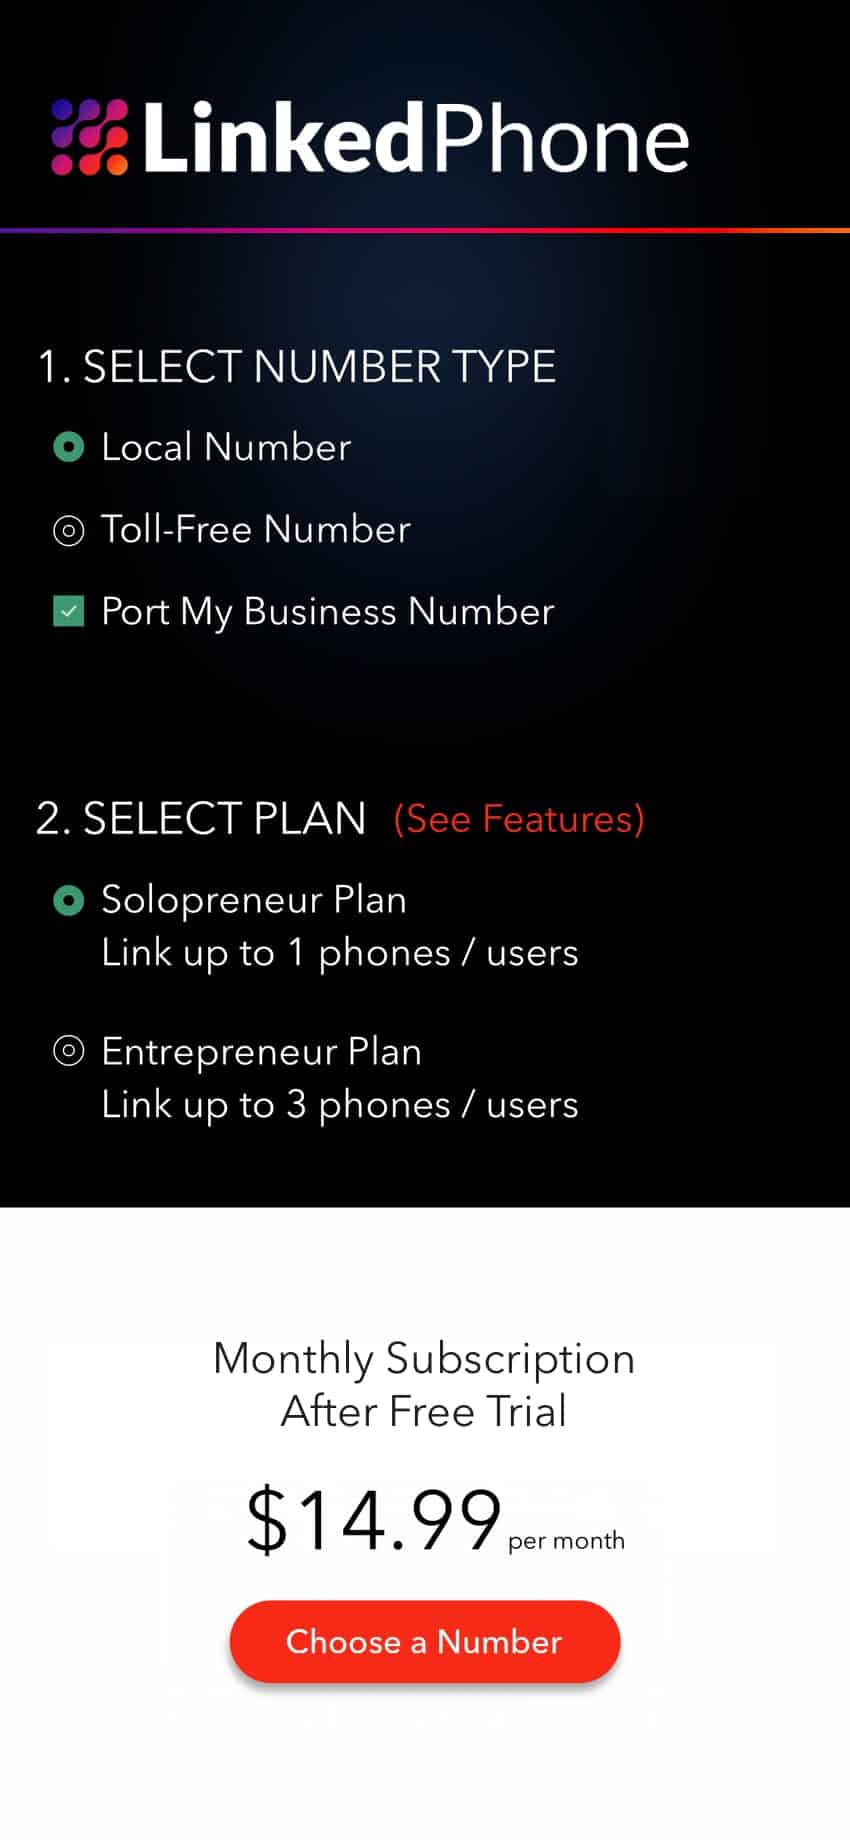 LinkedPhone Mobile App Screenshot - Choose a Subscription - Solopreneur Plan